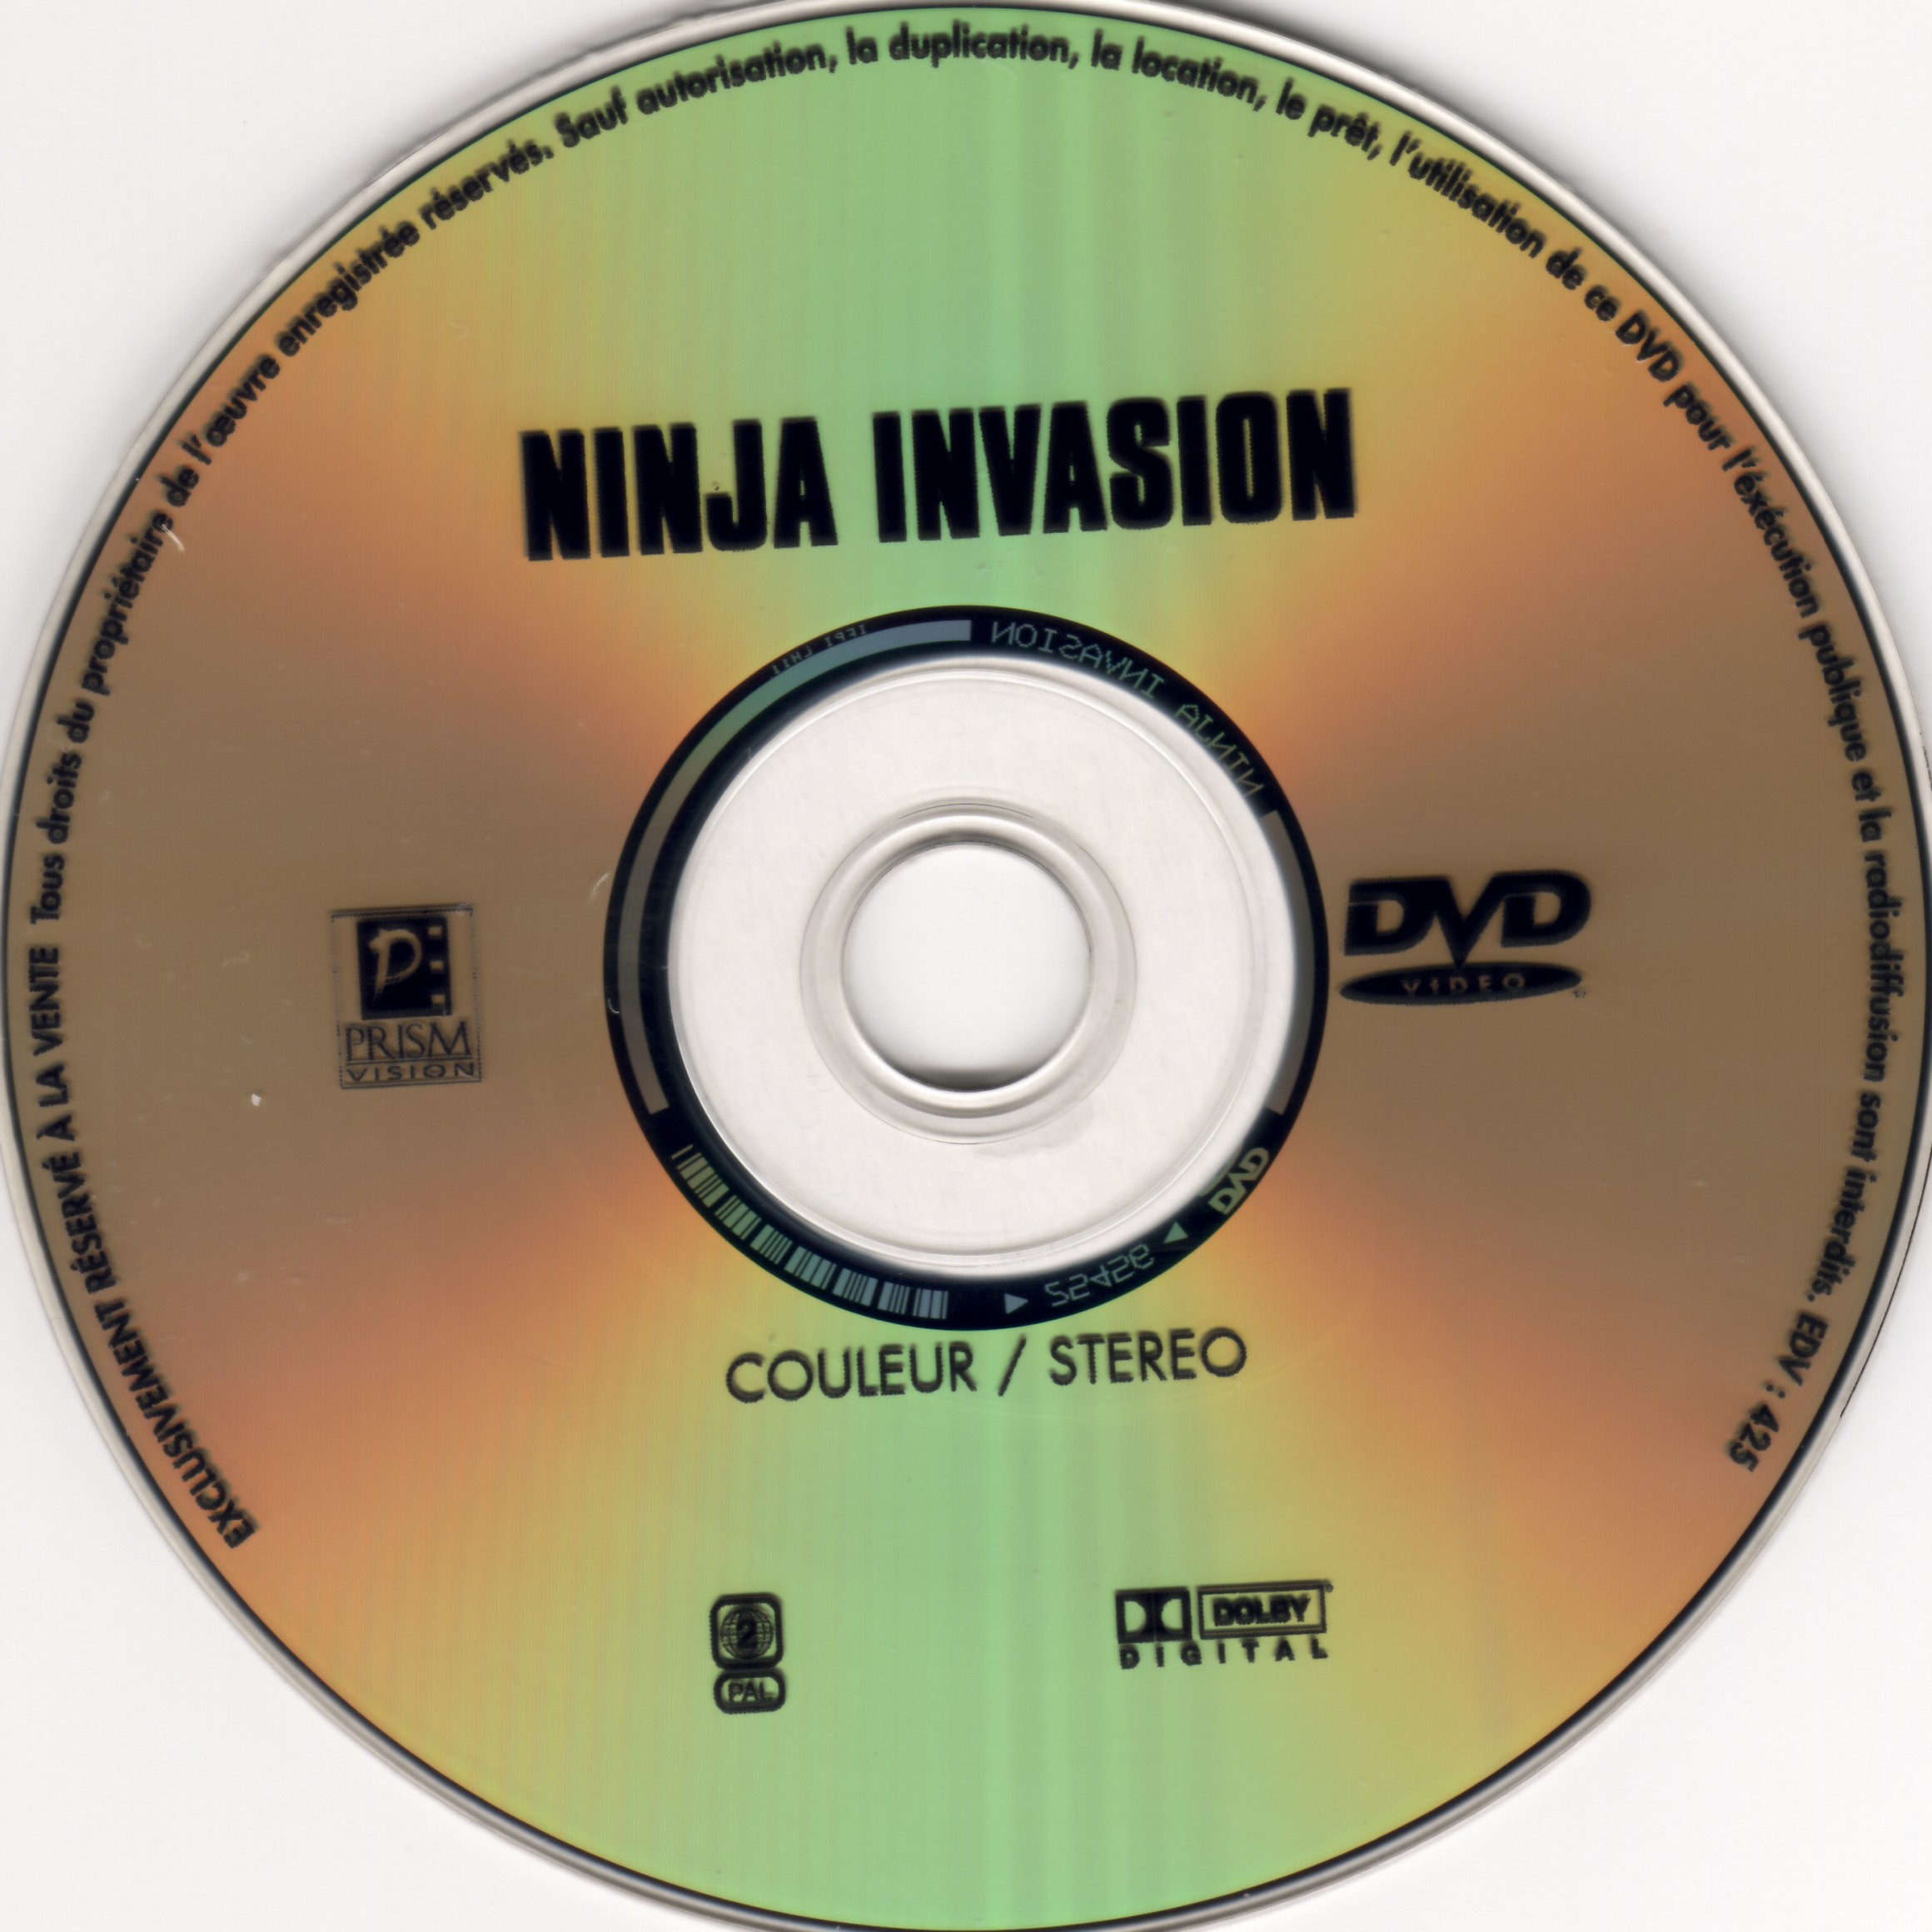 Ninja invasion